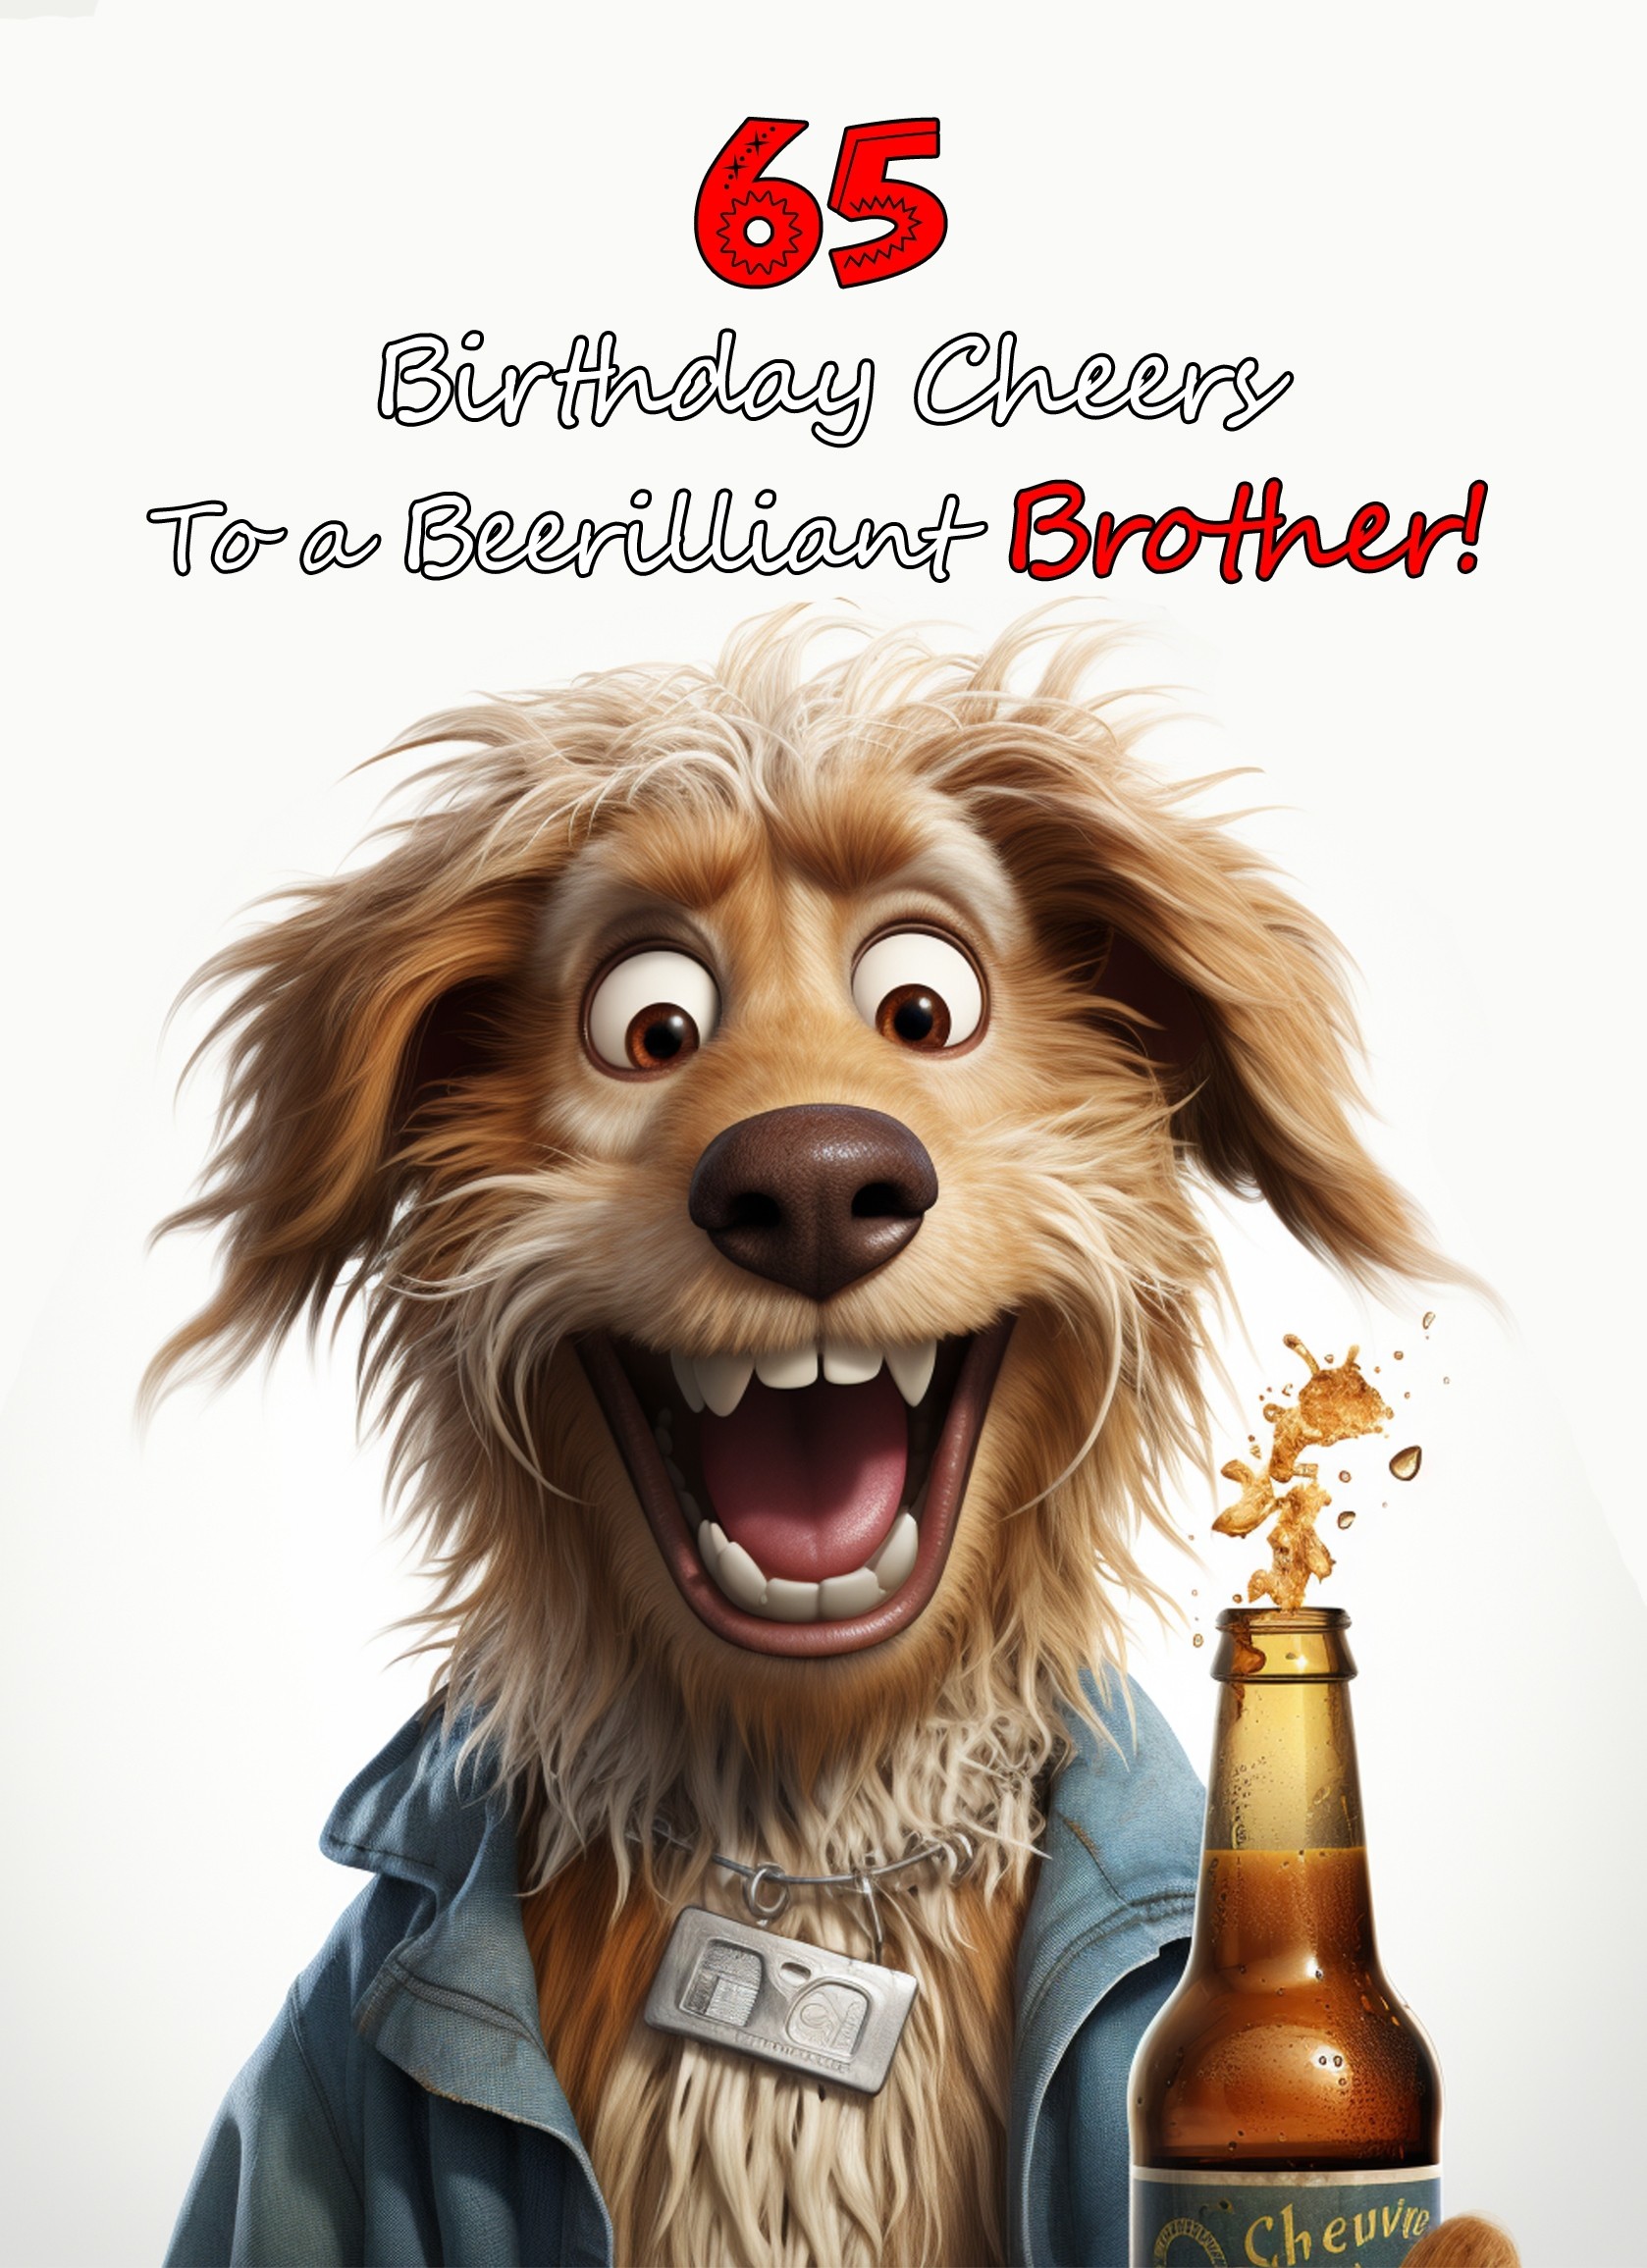 Brother 65th Birthday Card (Funny Beerilliant Birthday Cheers)